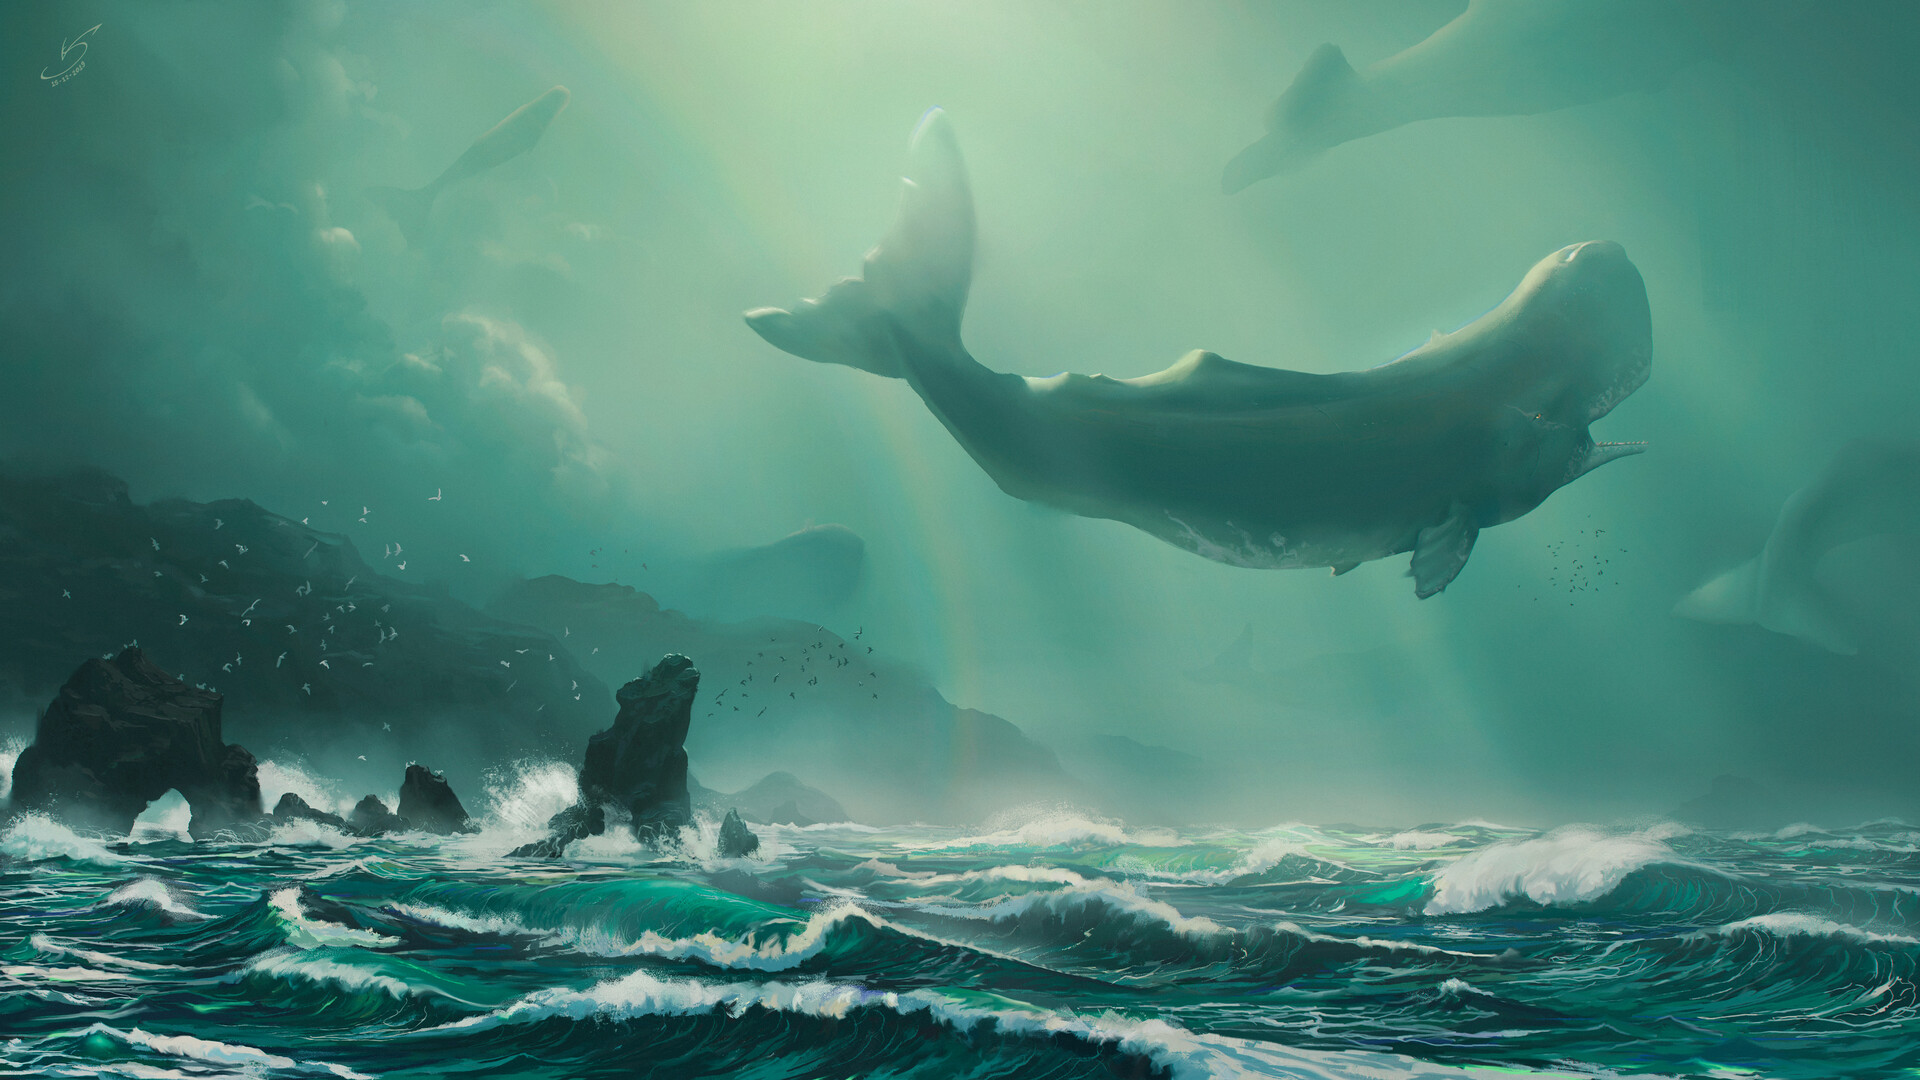 Victor Sales Digital Art Fantasy Art ArtStation Whale Sea Rainbows Mist Birds Floating Water Animals 1920x1080